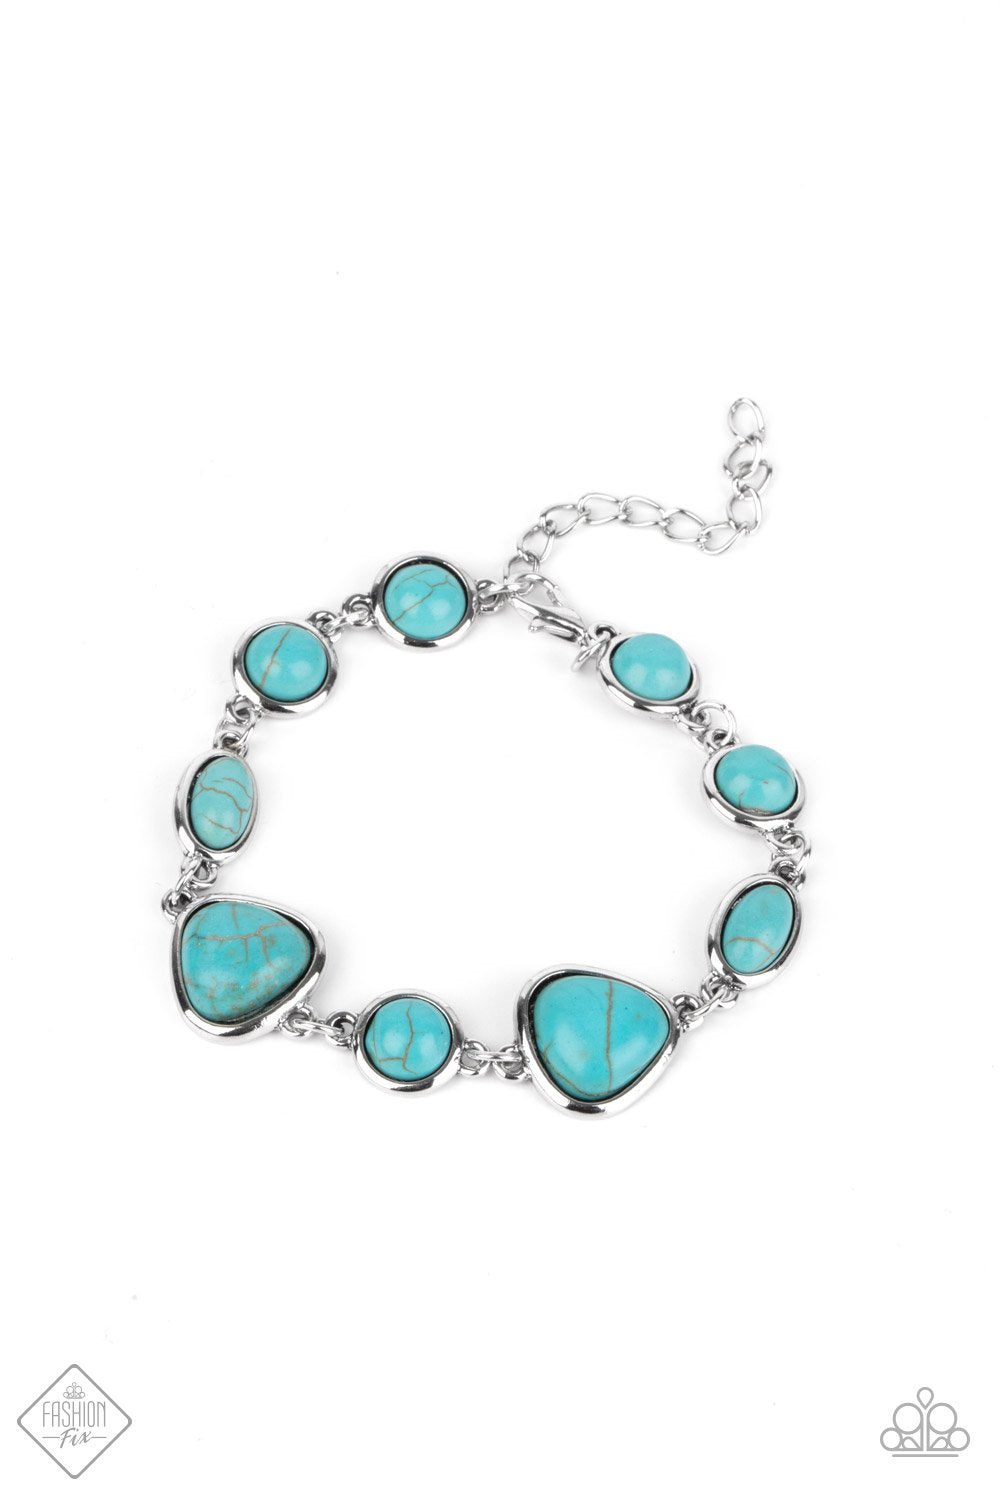 Eco-Friendly Fashionista - Turquoise Blue  - March 2021 Paparazzi Fashion Fix Bracelet